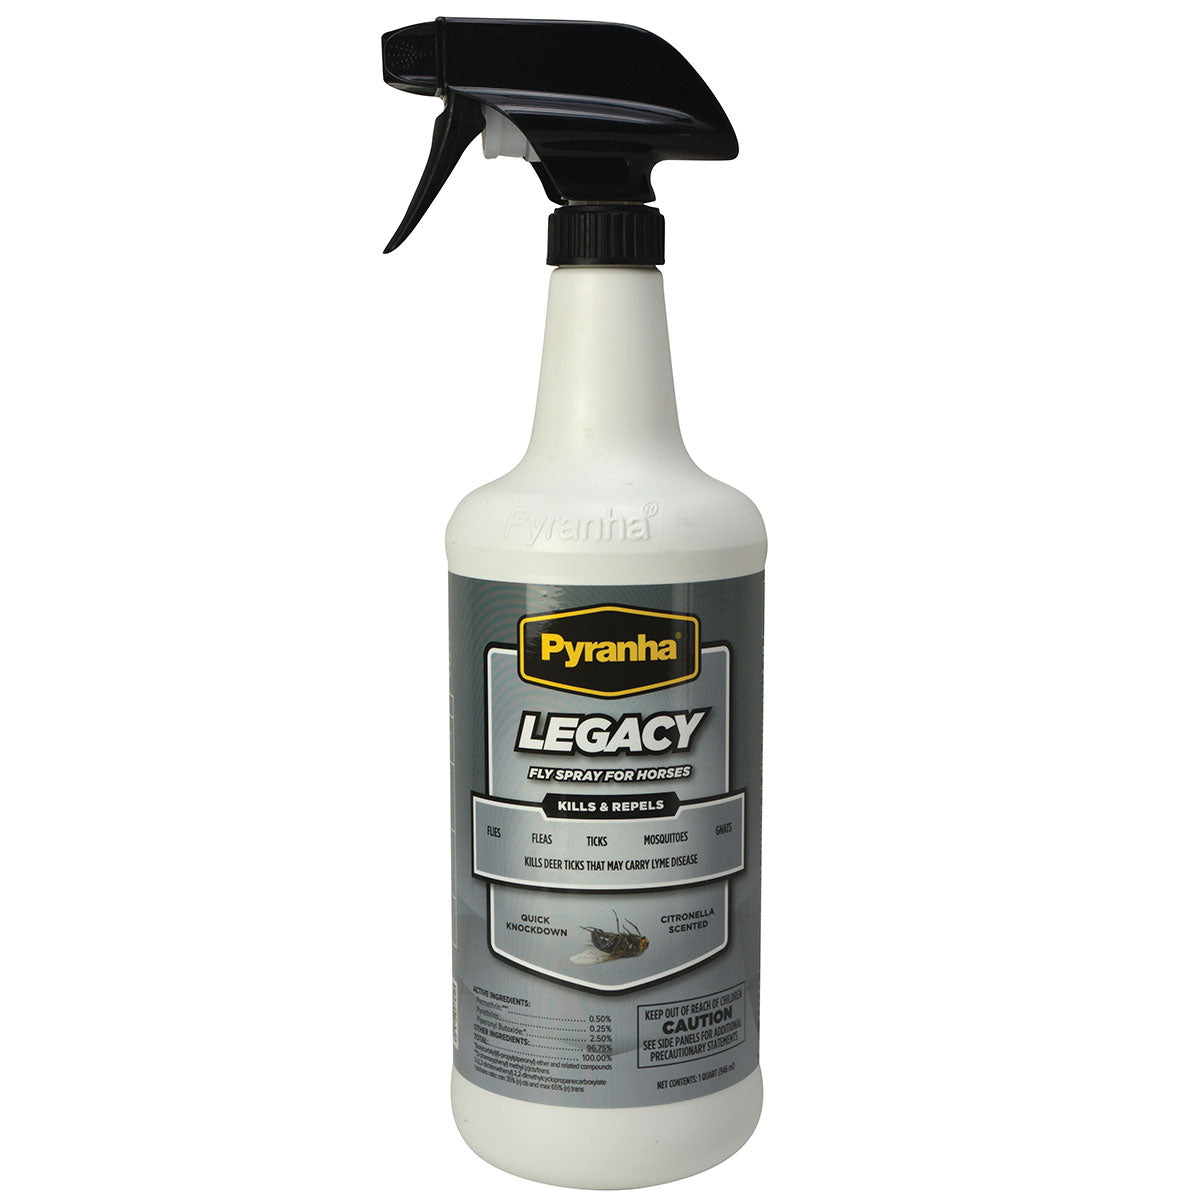 Pyranha Legacy Sweat Proof Fly Spray 32 oz